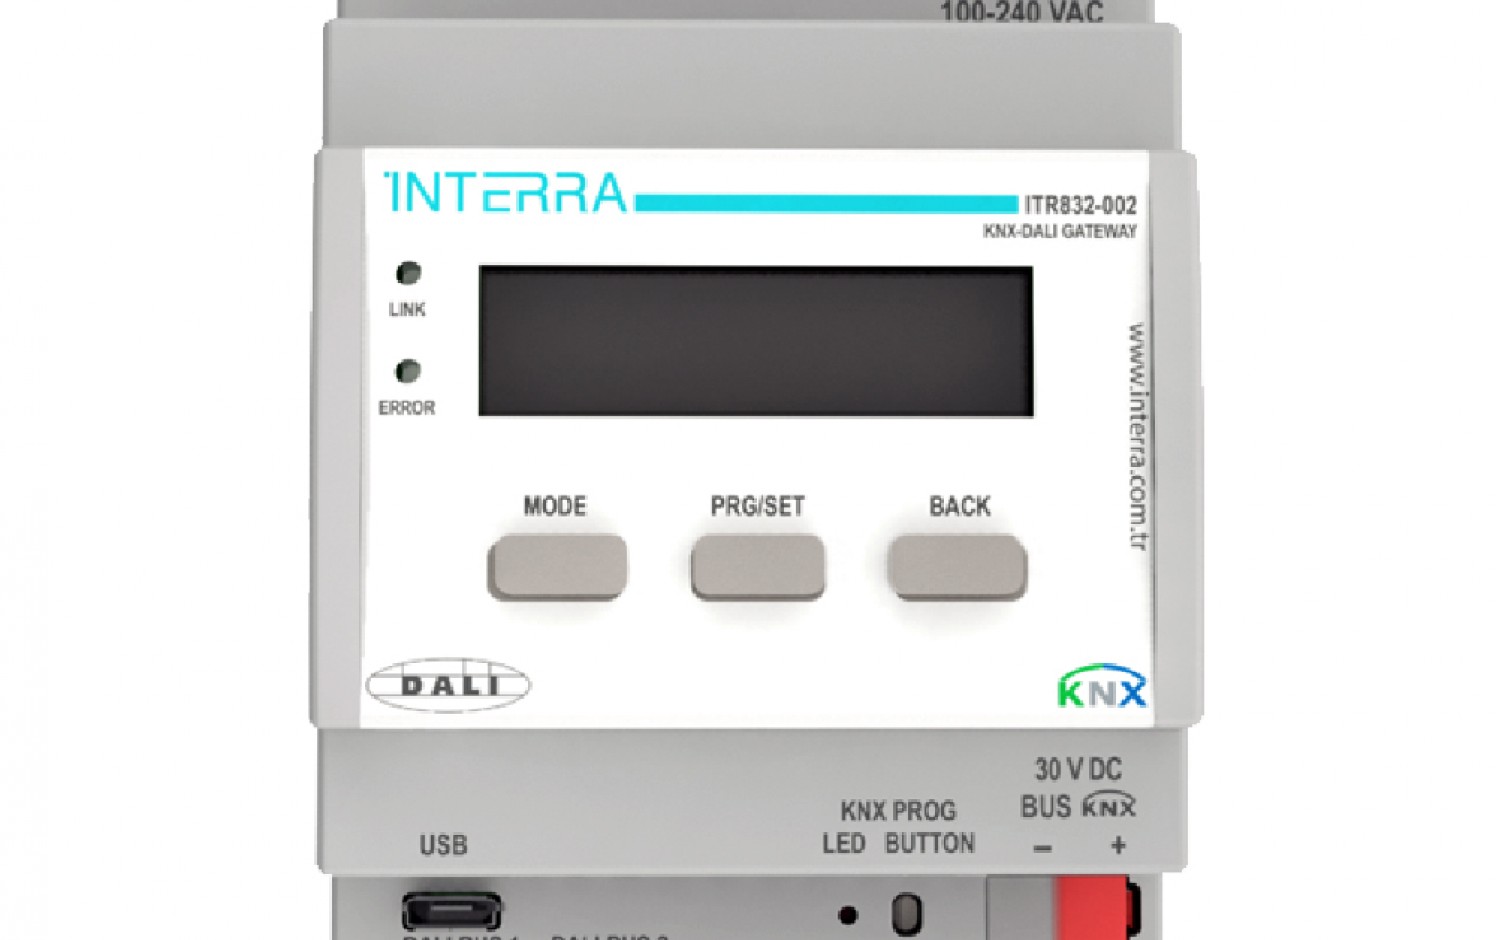 Interra KNX DALI Gateway Hakkında (ENG)